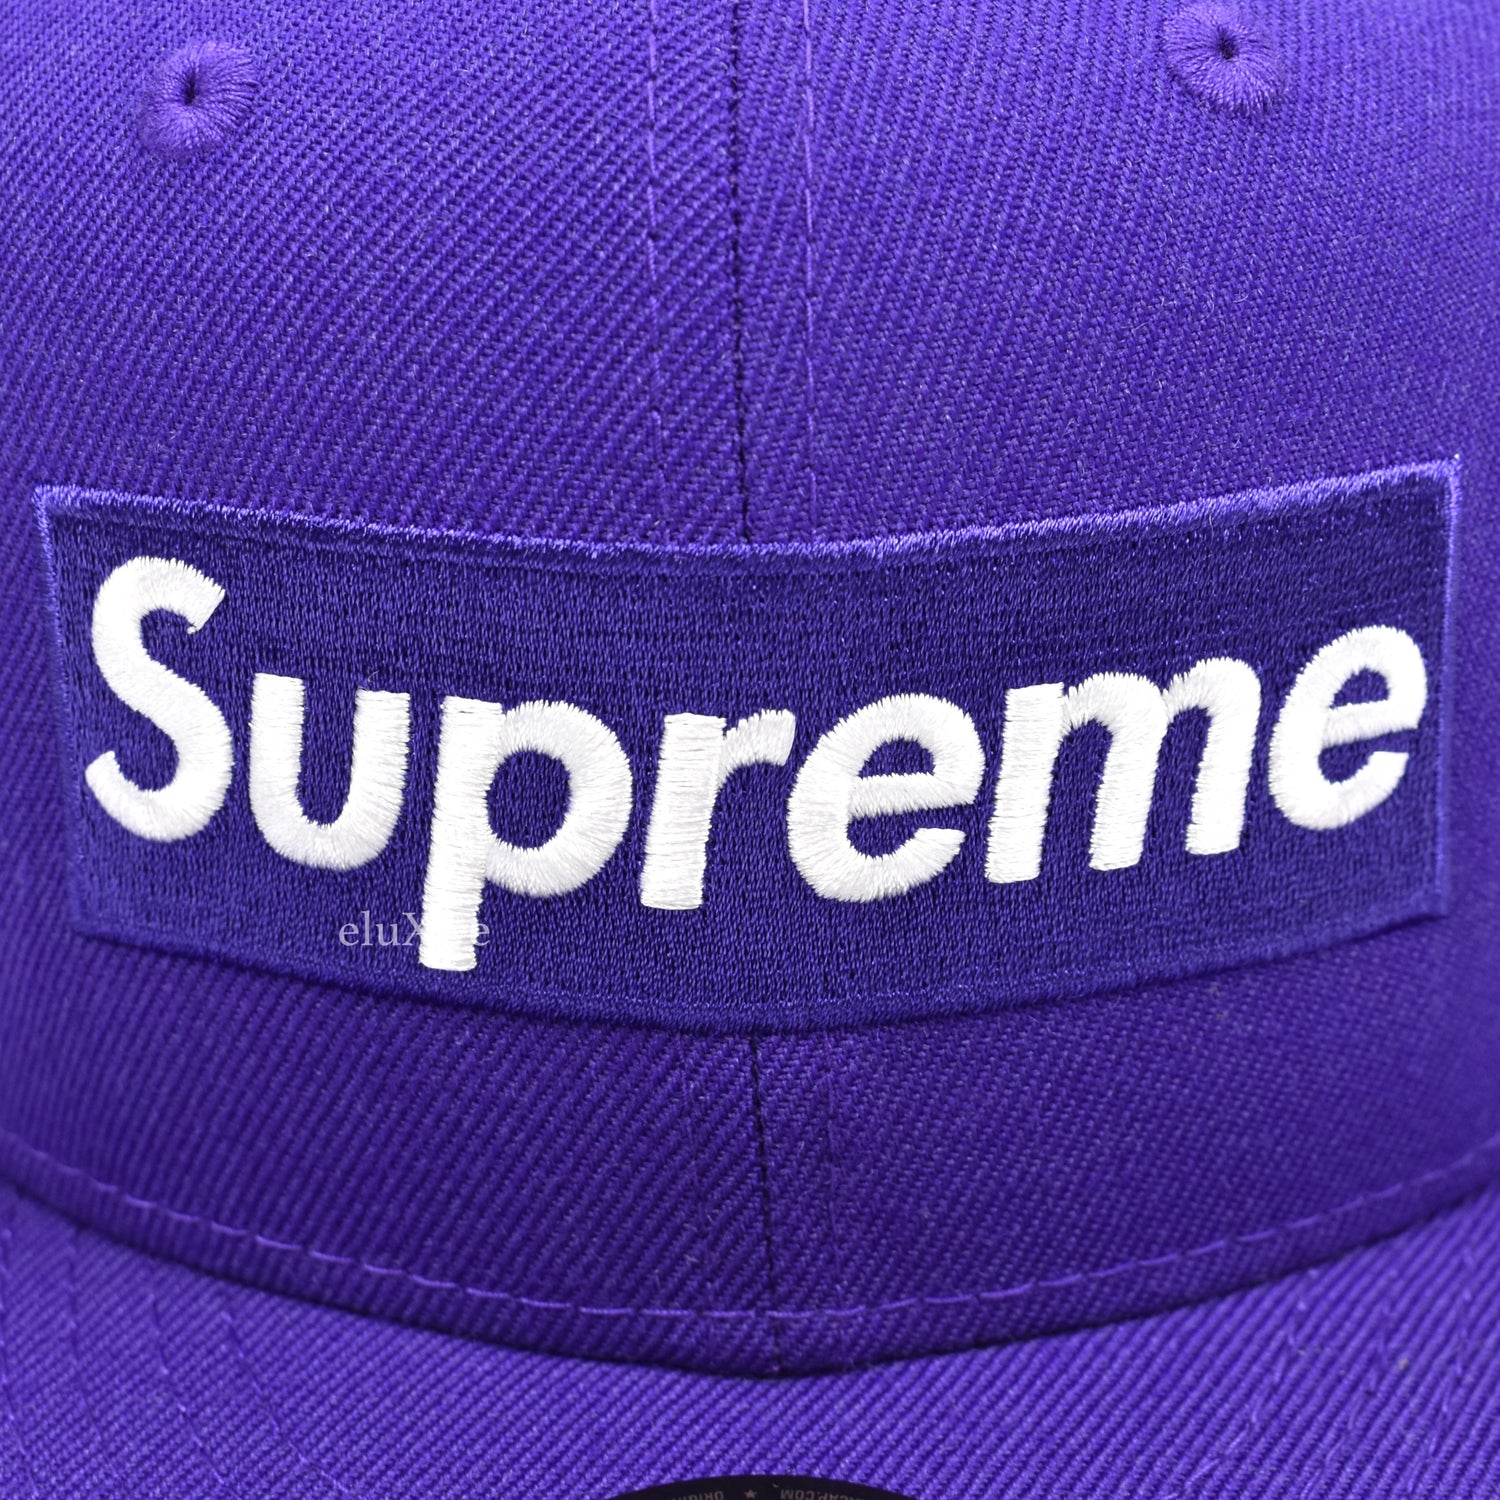 Supreme x New Era - Spring Training Box Logo Hat (Purple) – eluXive